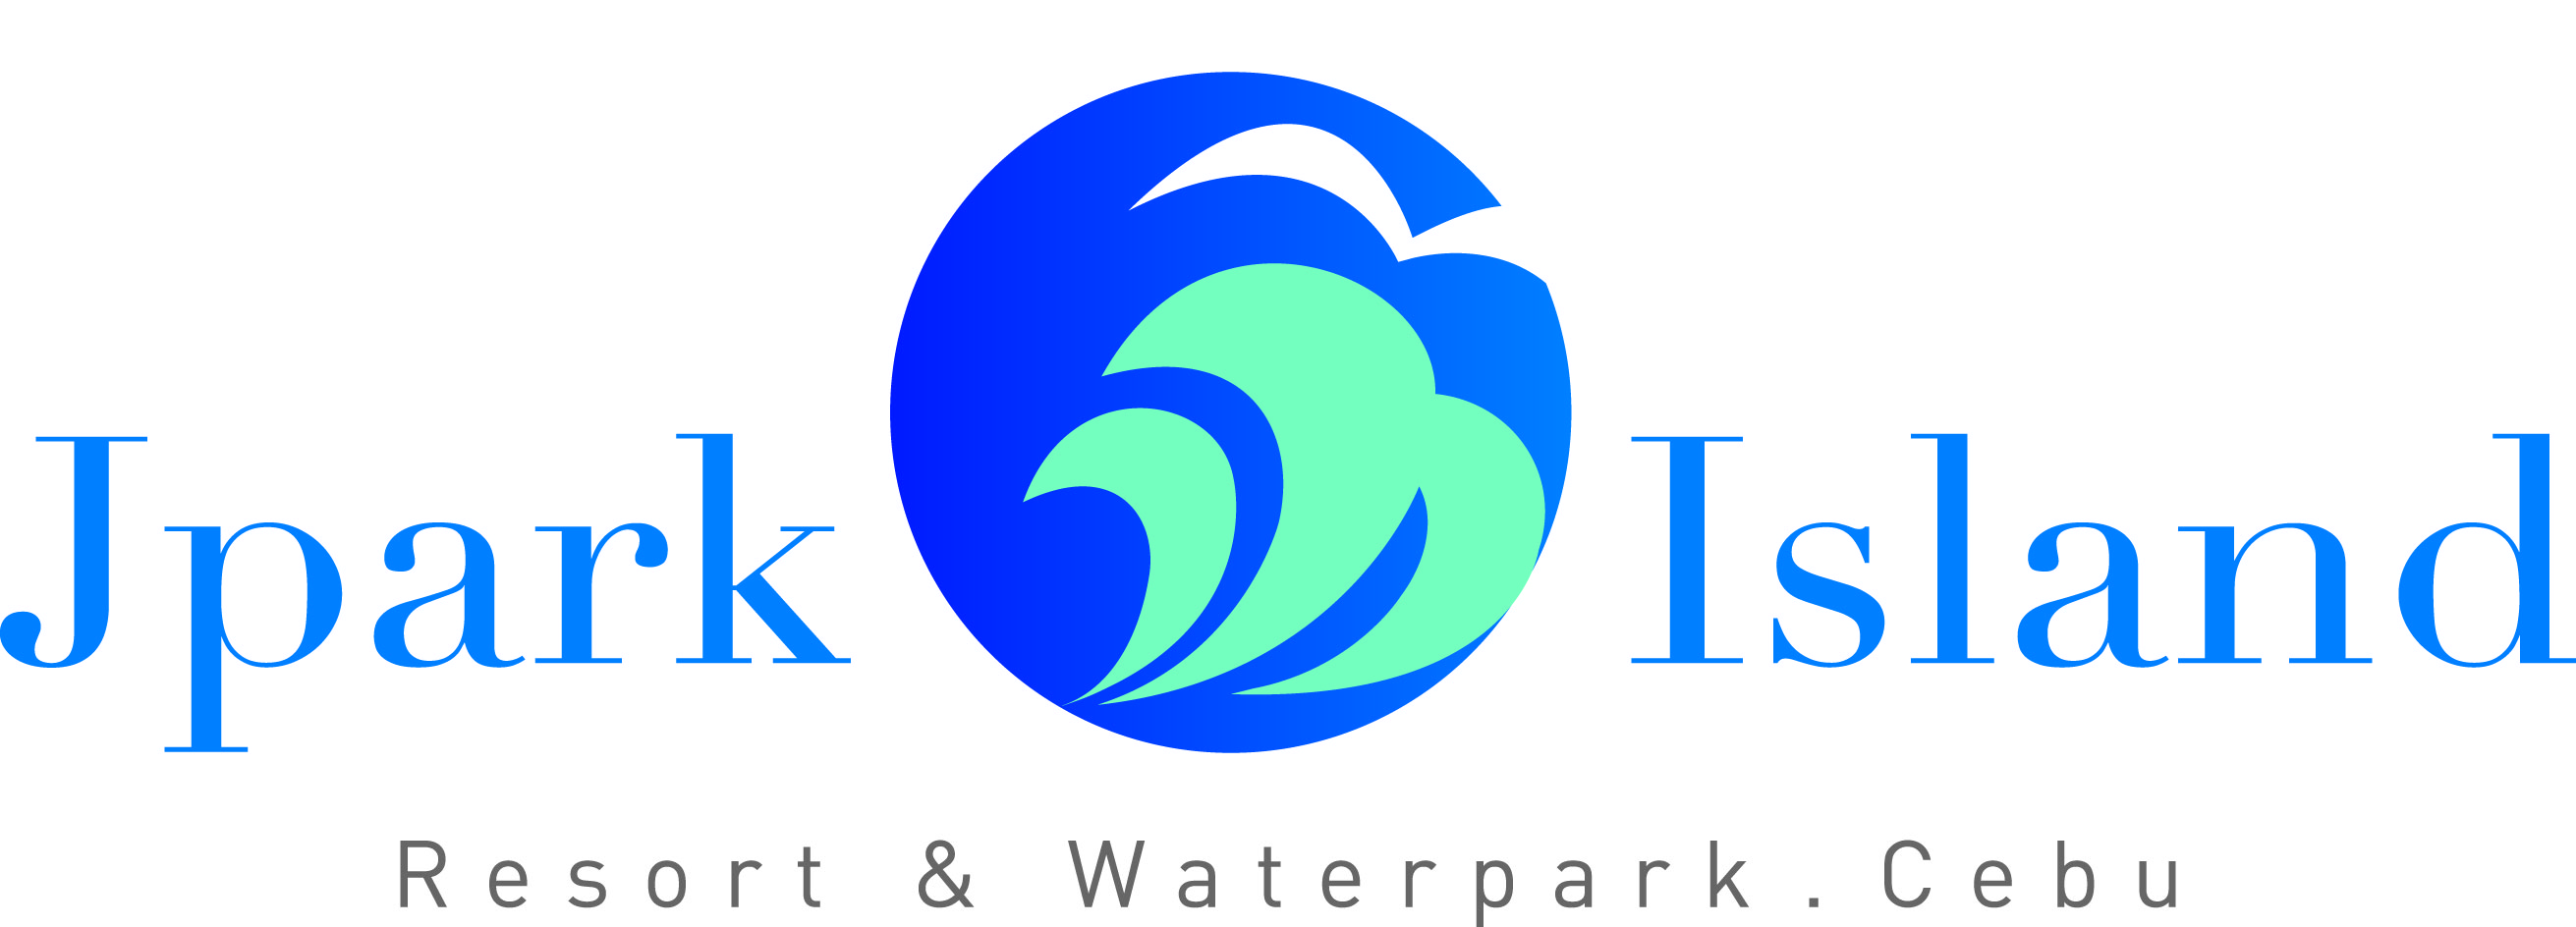 Jpark Island Resort & Waterpark Cebu (5)